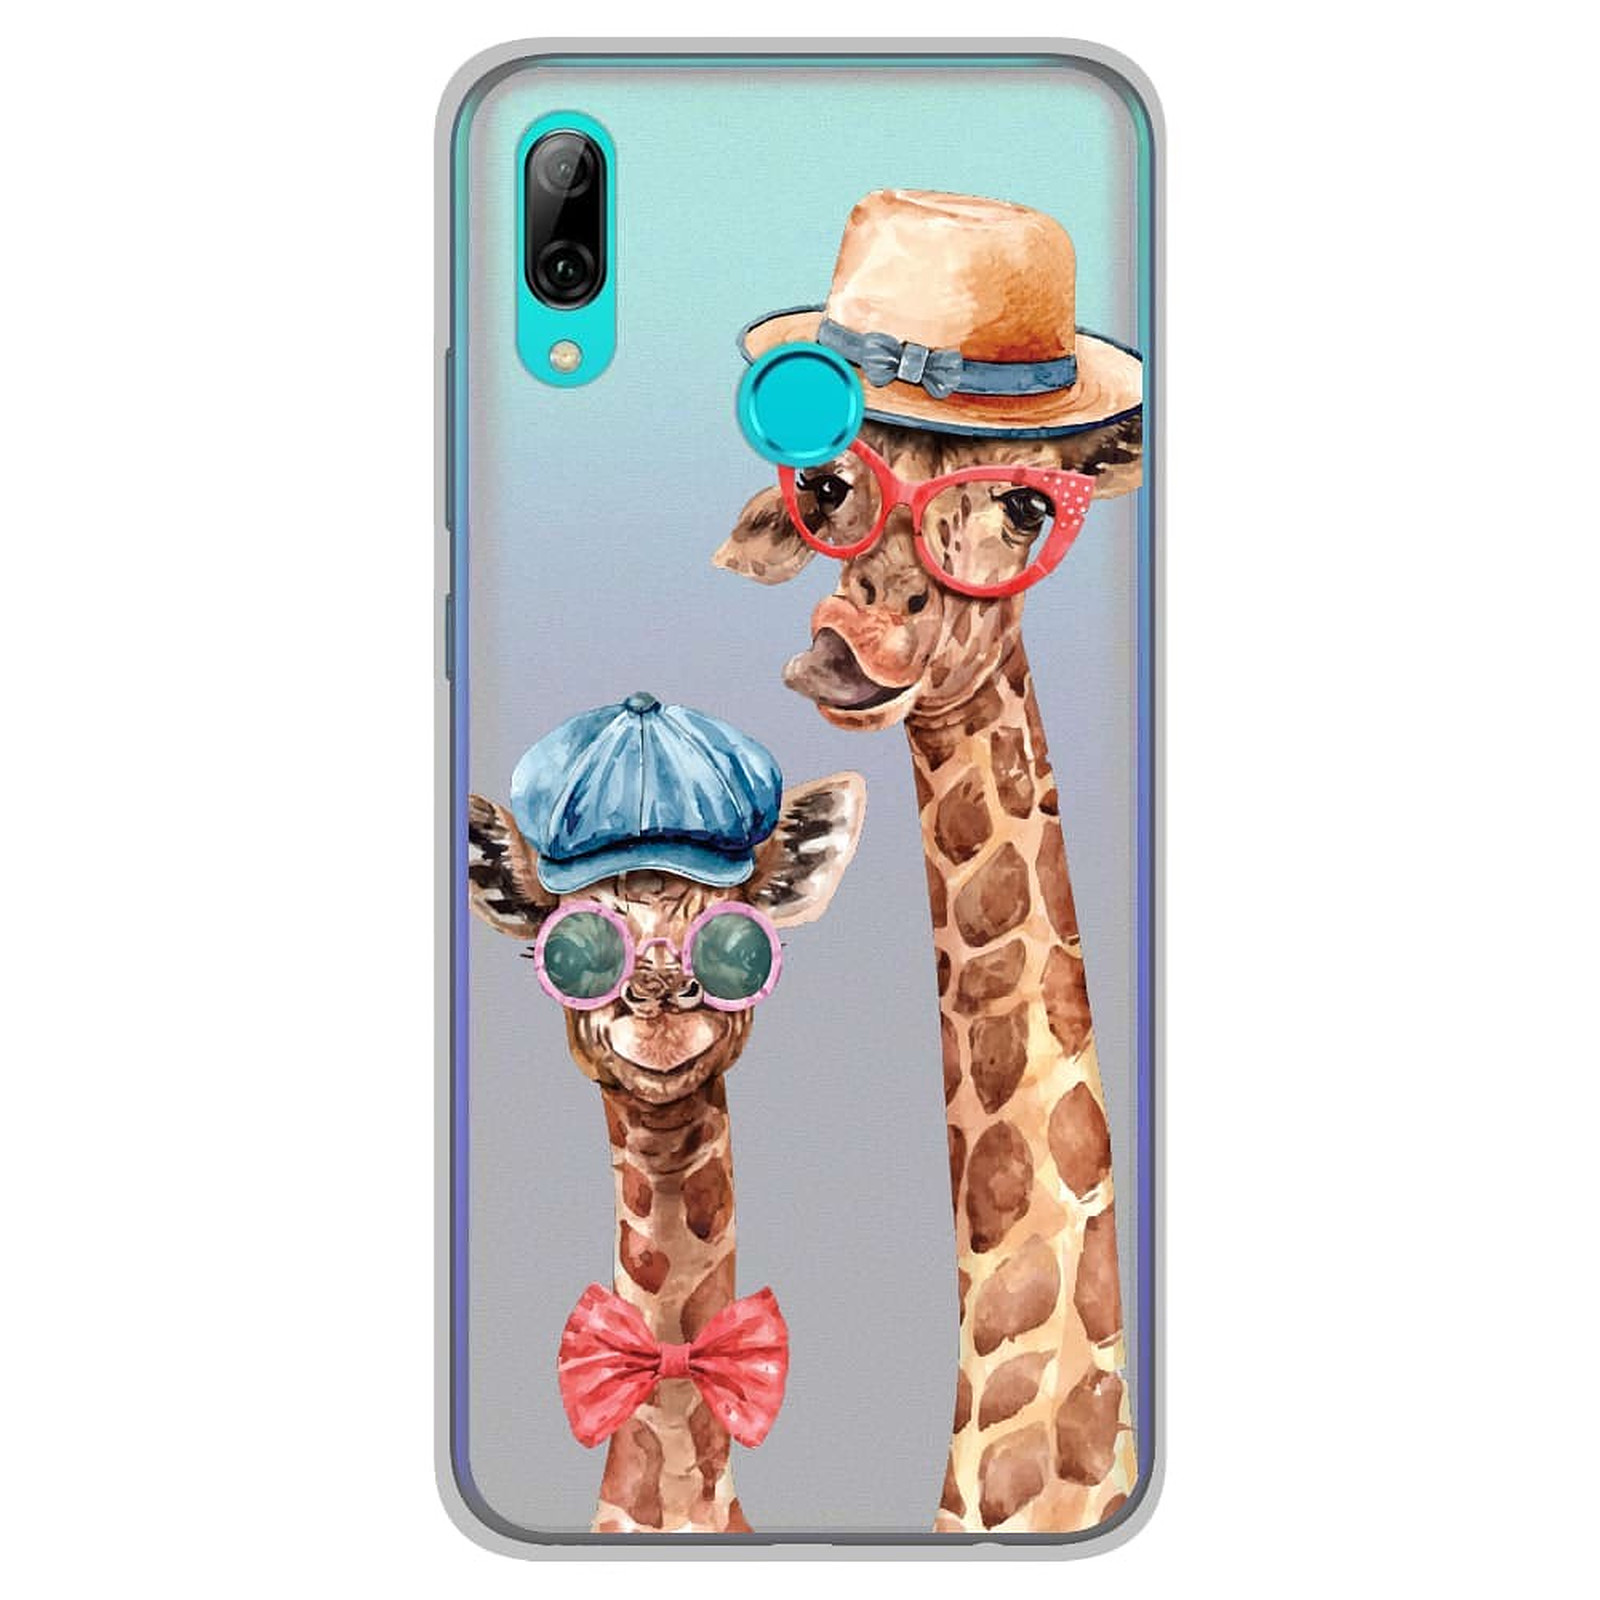 1001 Coques Coque silicone gel Huawei P Smart 2019 motif Funny Girafe - Coque telephone 1001Coques